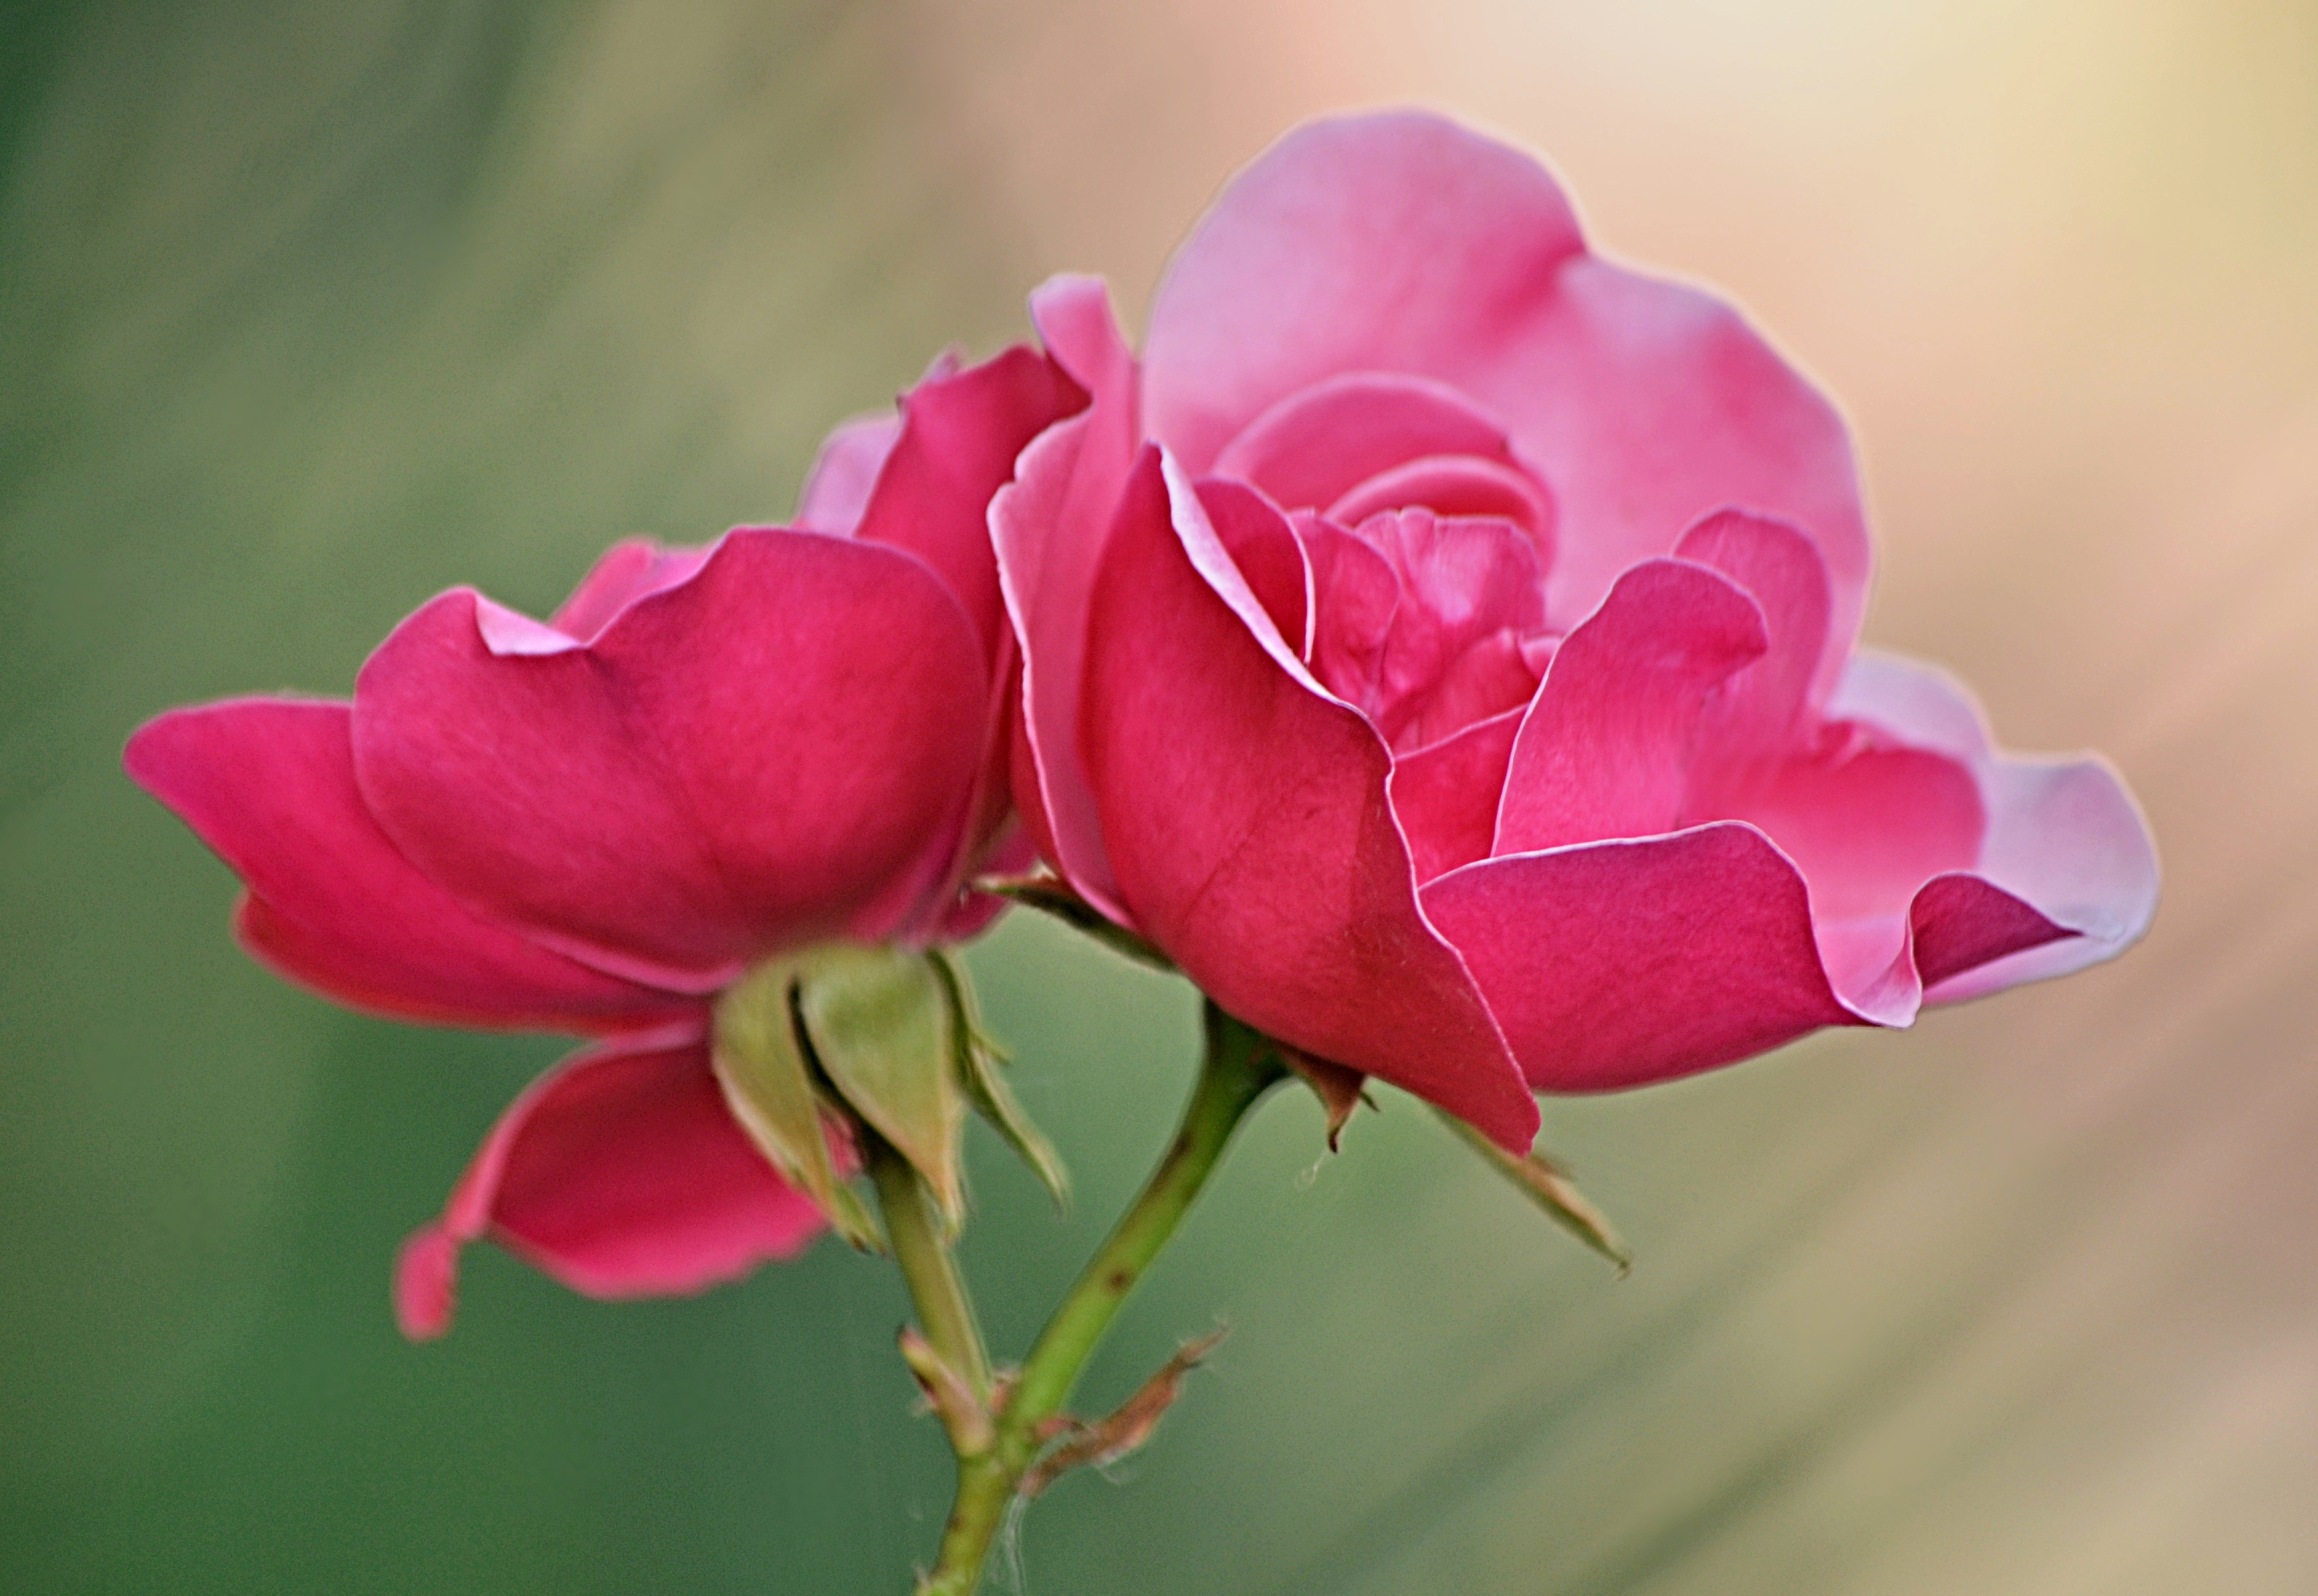 free flowers wallpaper download,flower,flowering plant,petal,pink,garden roses